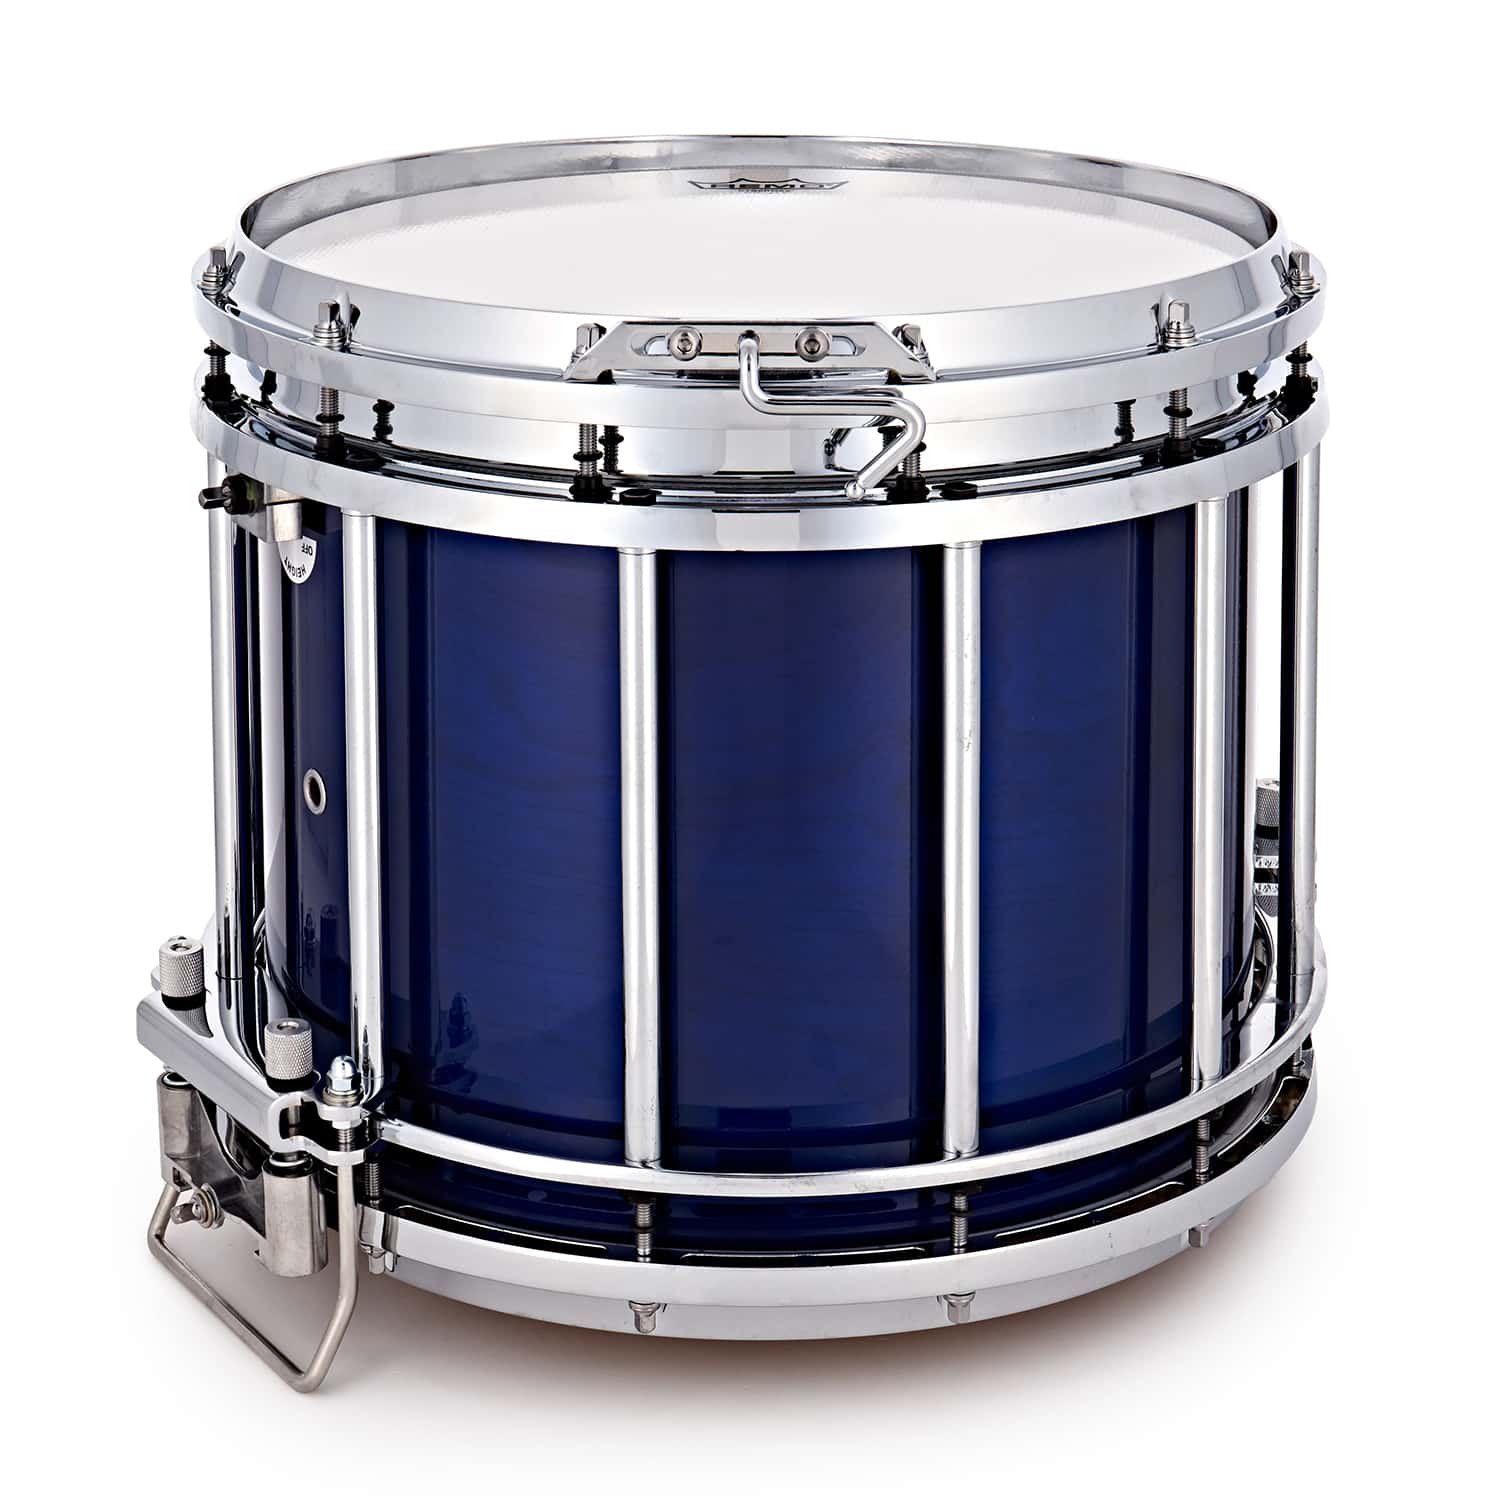 HTS 800 Snare Drum - Premier Drums